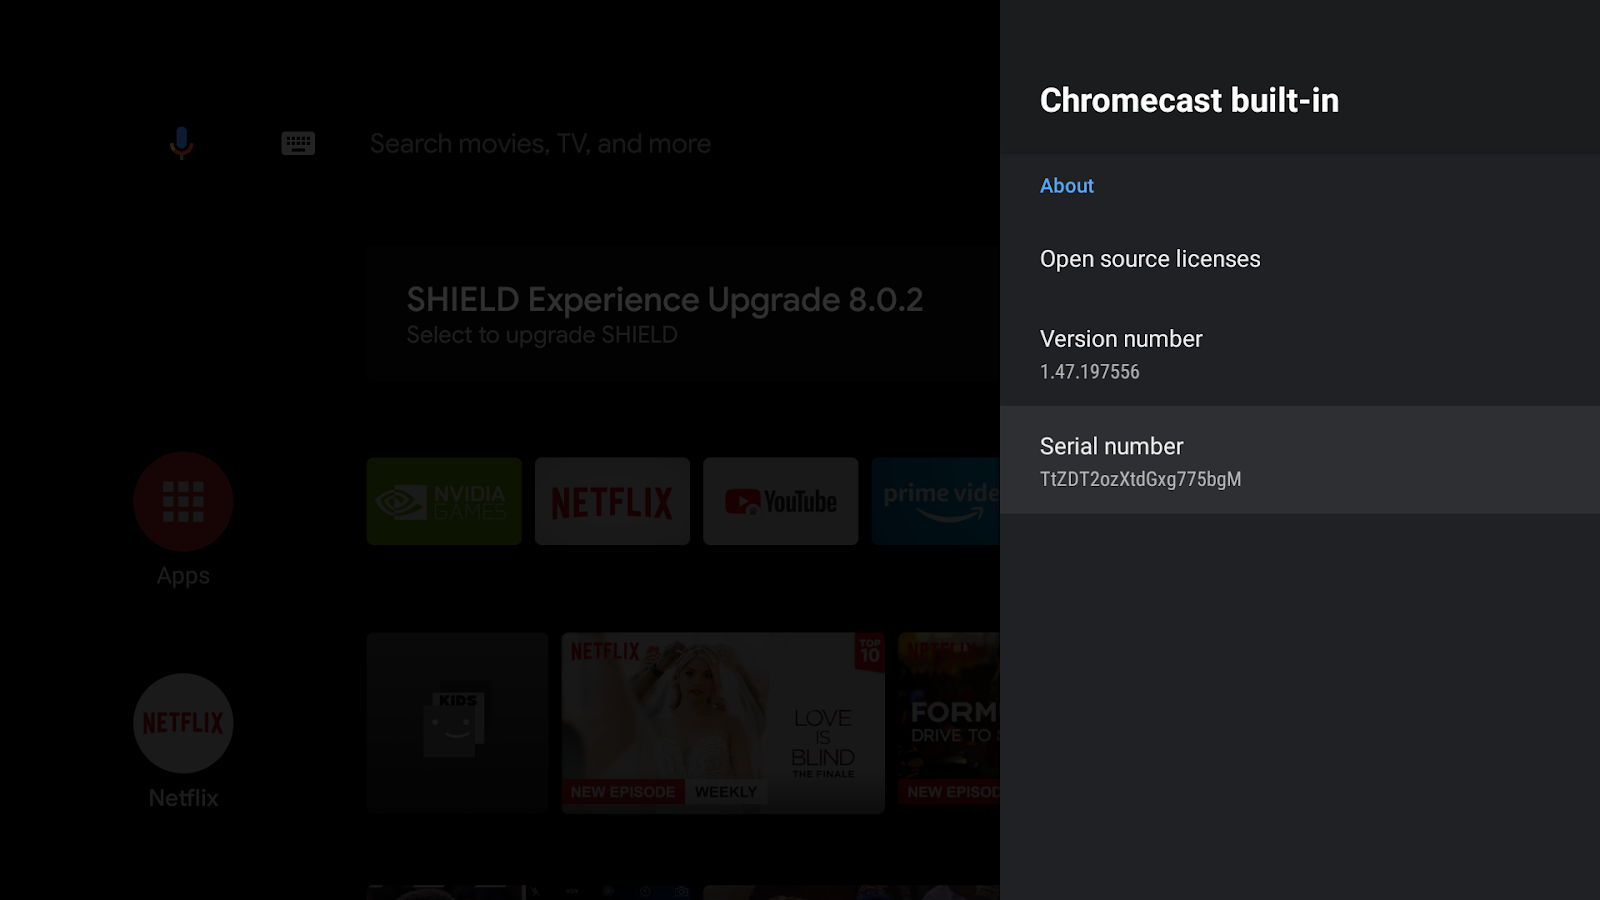 Android TV 屏幕的图片，其中显示了“内置 Chromecast”屏幕、版本号和序列号